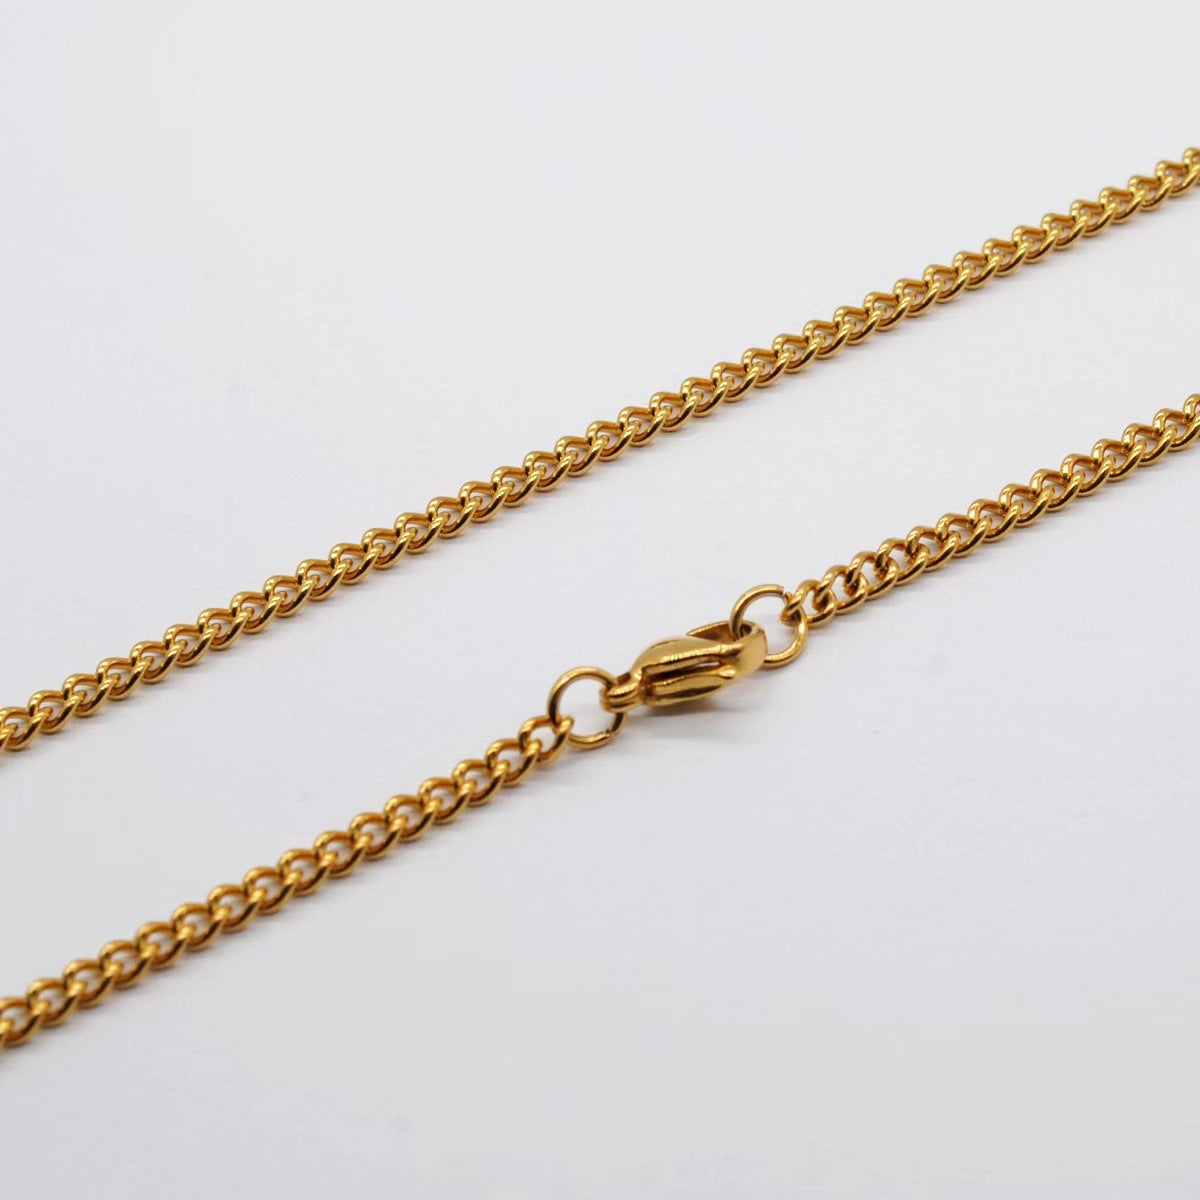 Simple Elegant Necklace Stainless Steel 18K Gold Mini English Letter Pendant